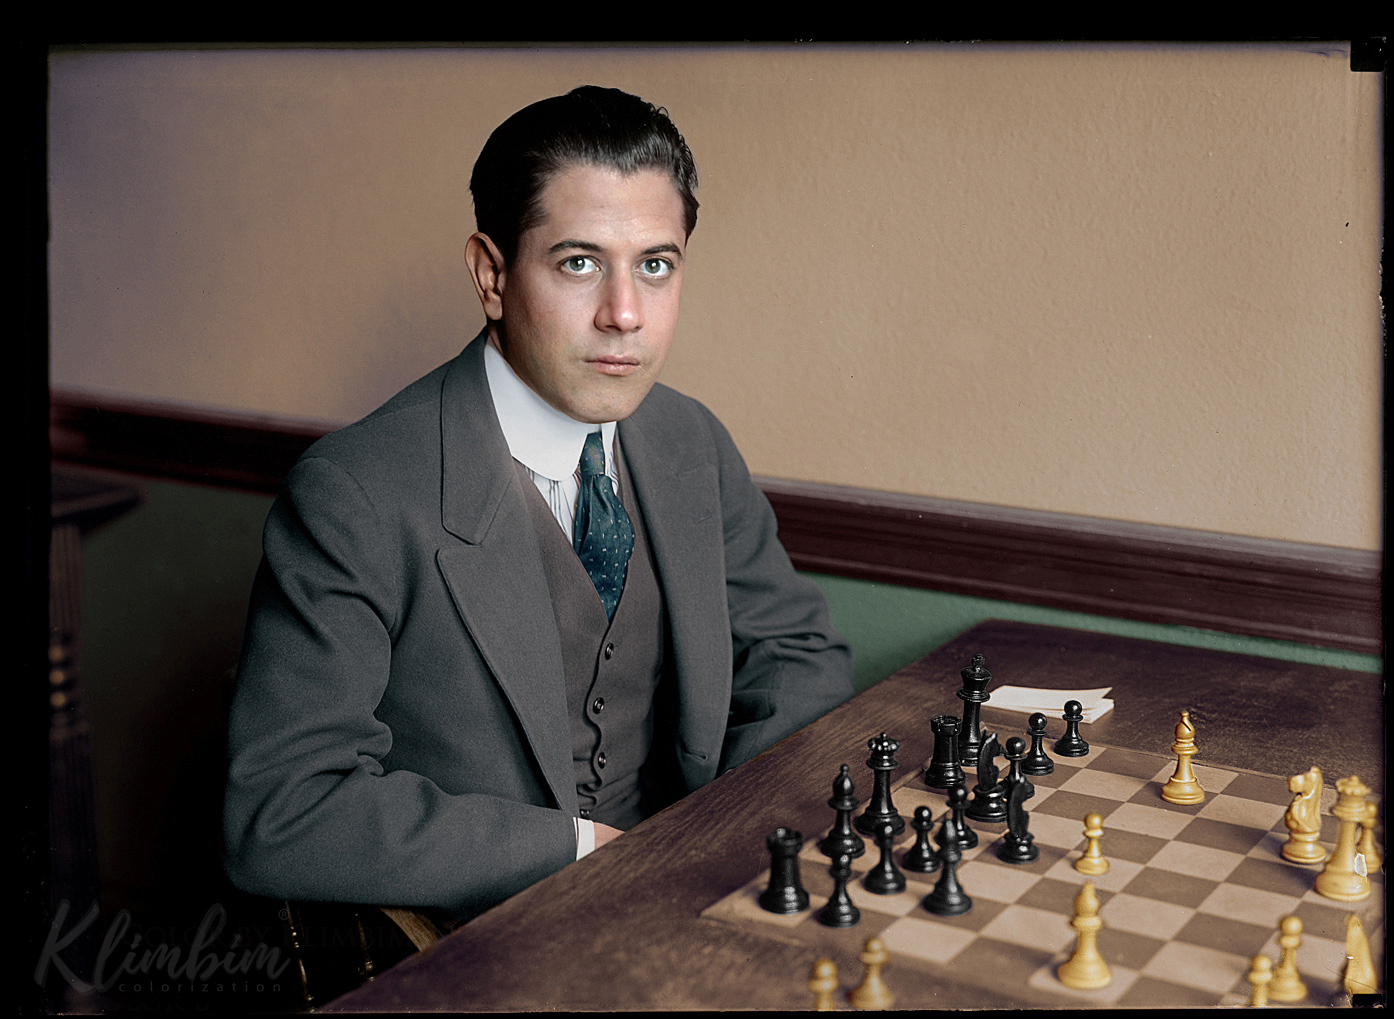 Akiba Rubinstein VS Alexander Alekhine